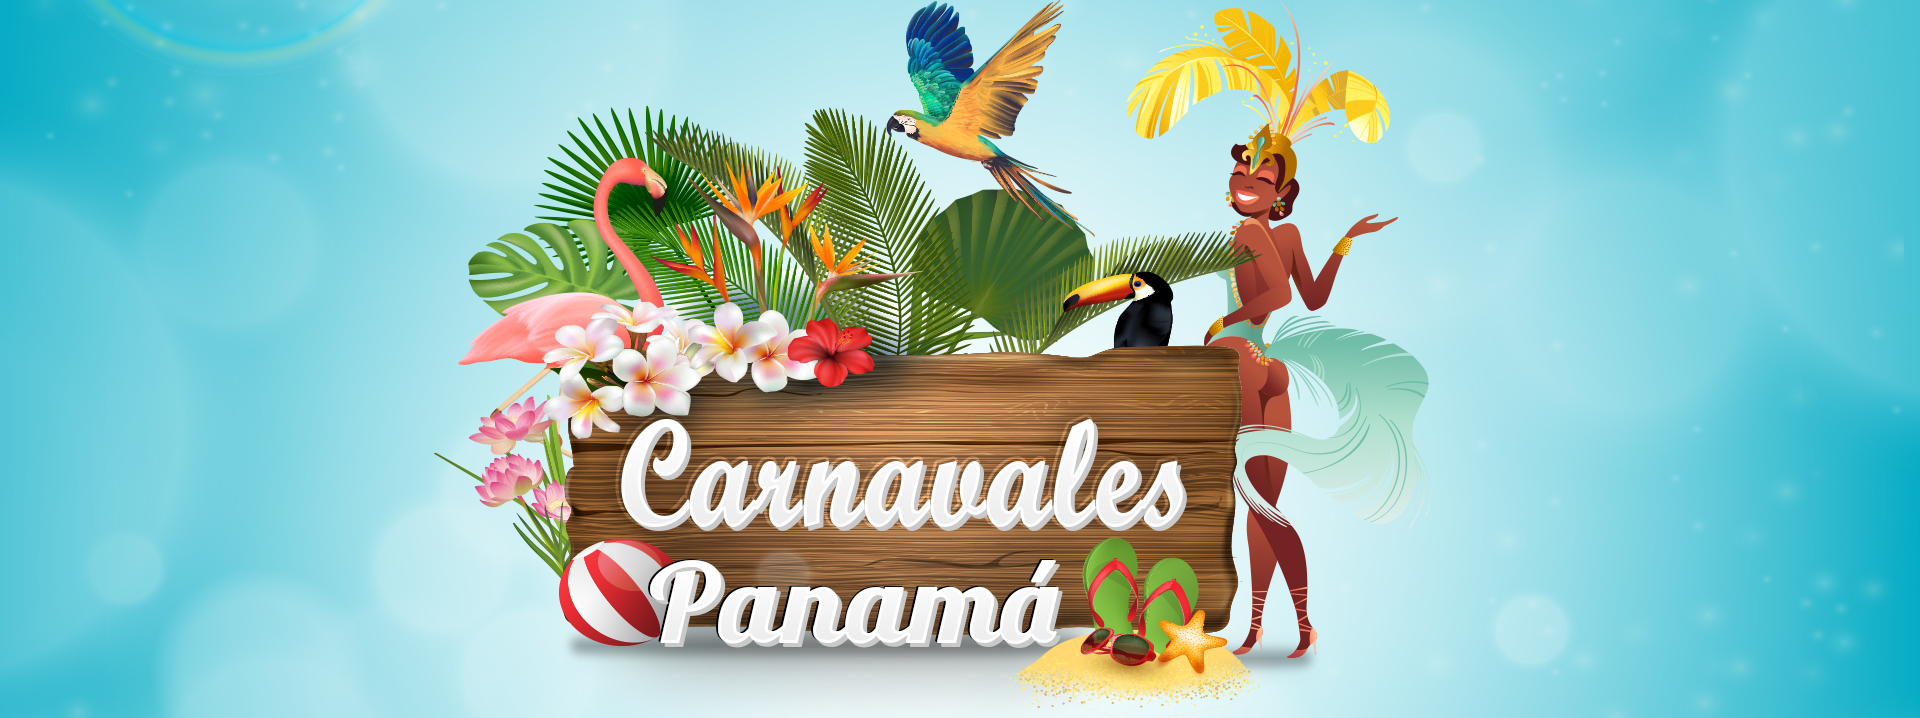 Carnavales Panama 2018